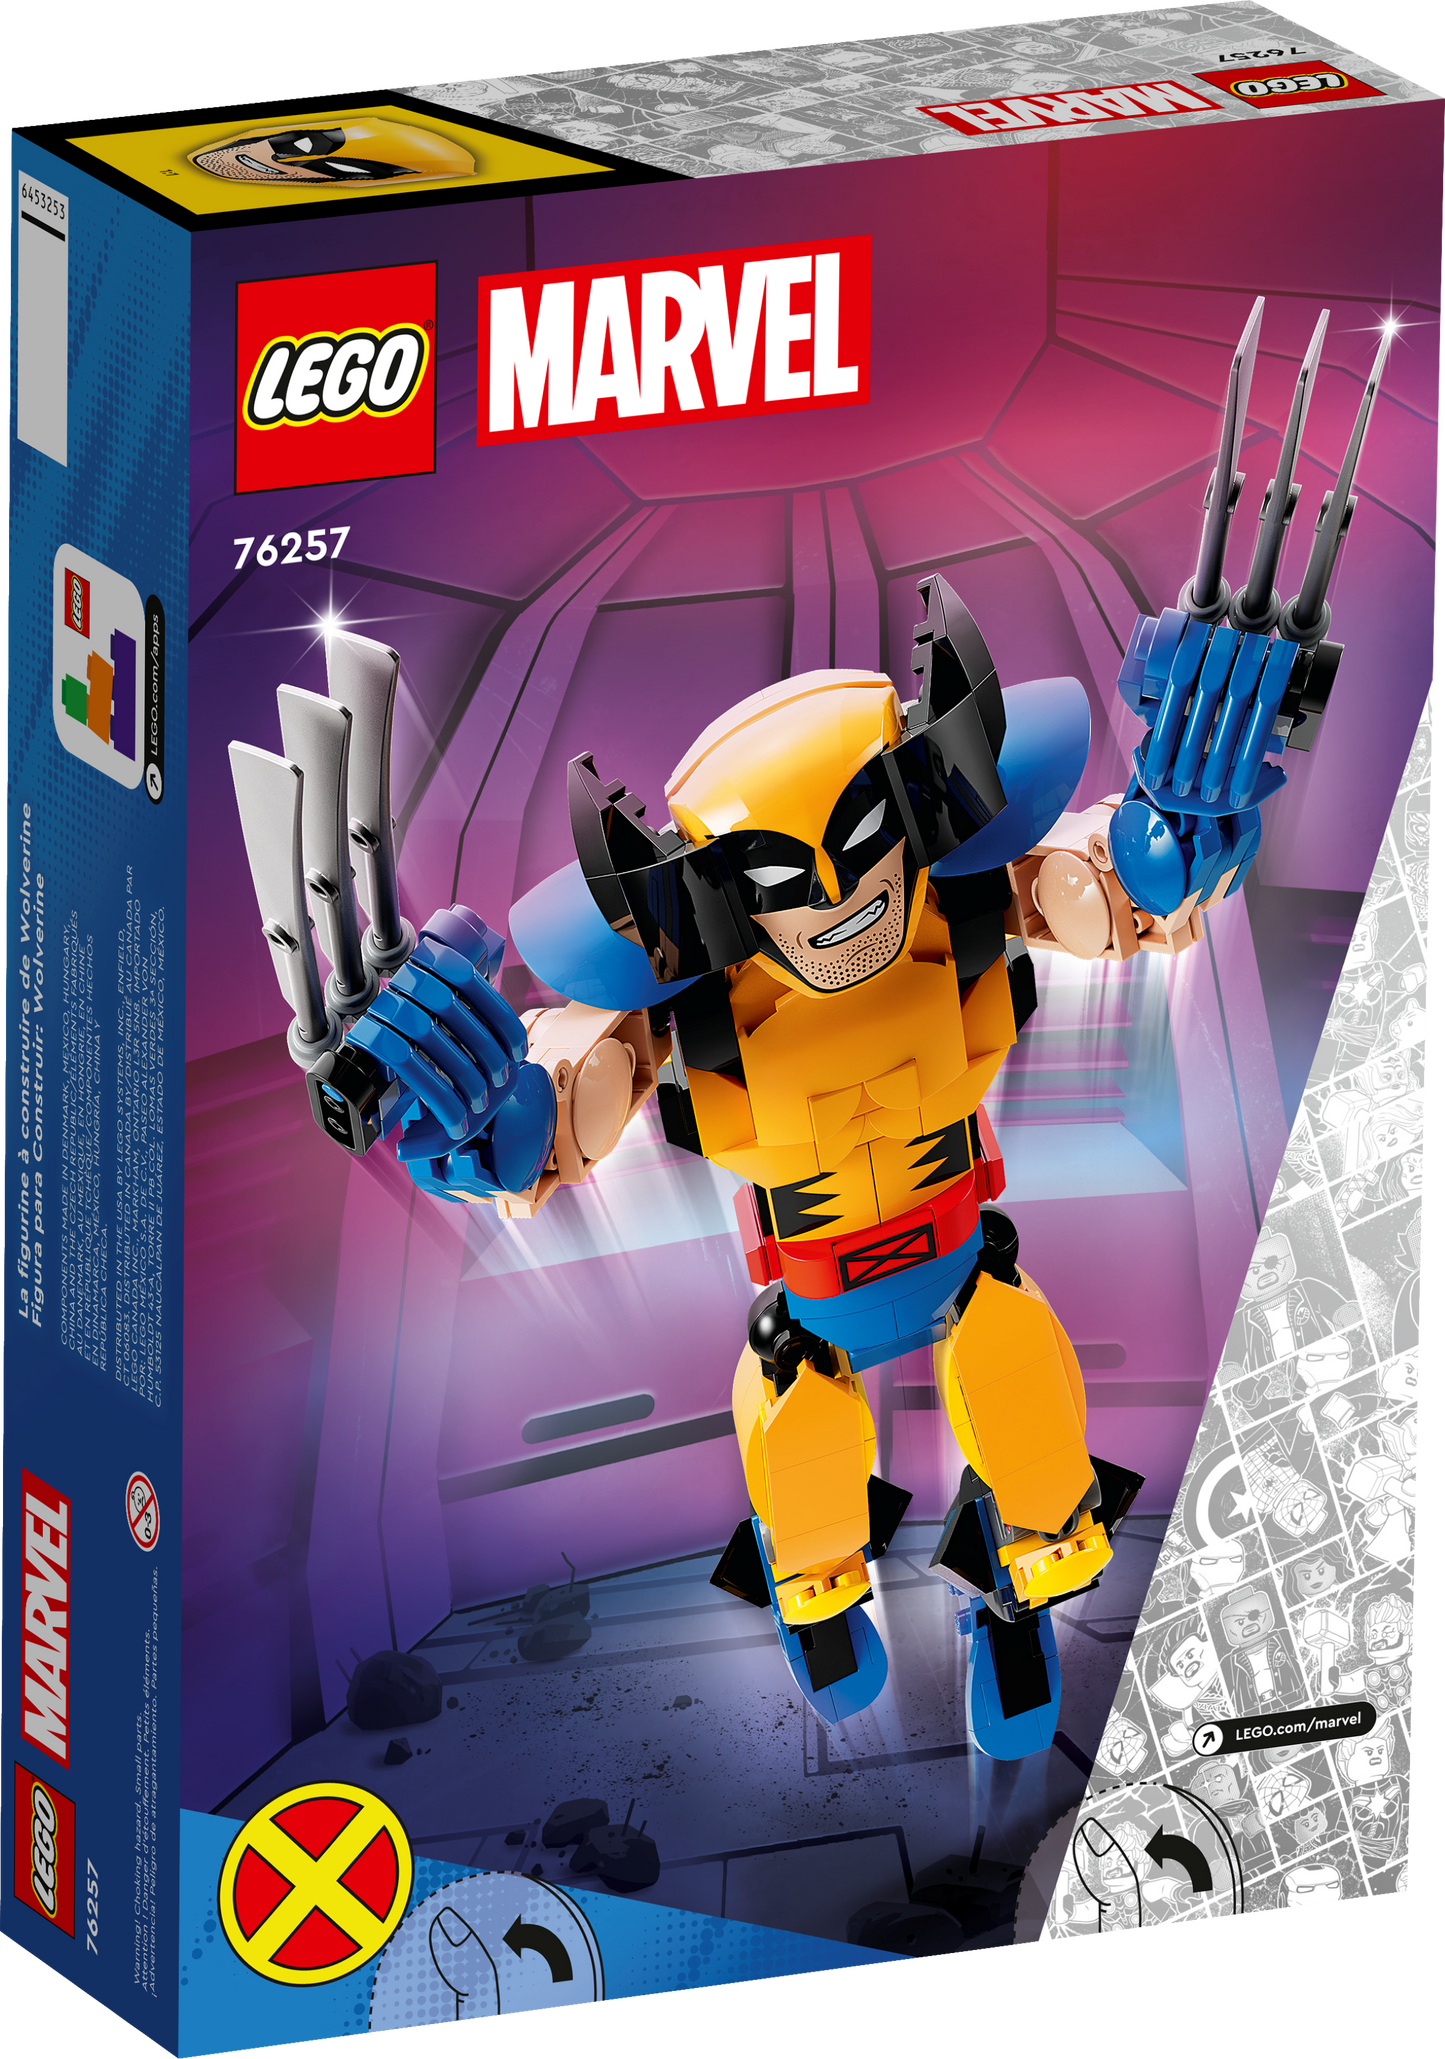 76257 LEGO Marvel Super Heroes - Personaggio di Wolverine